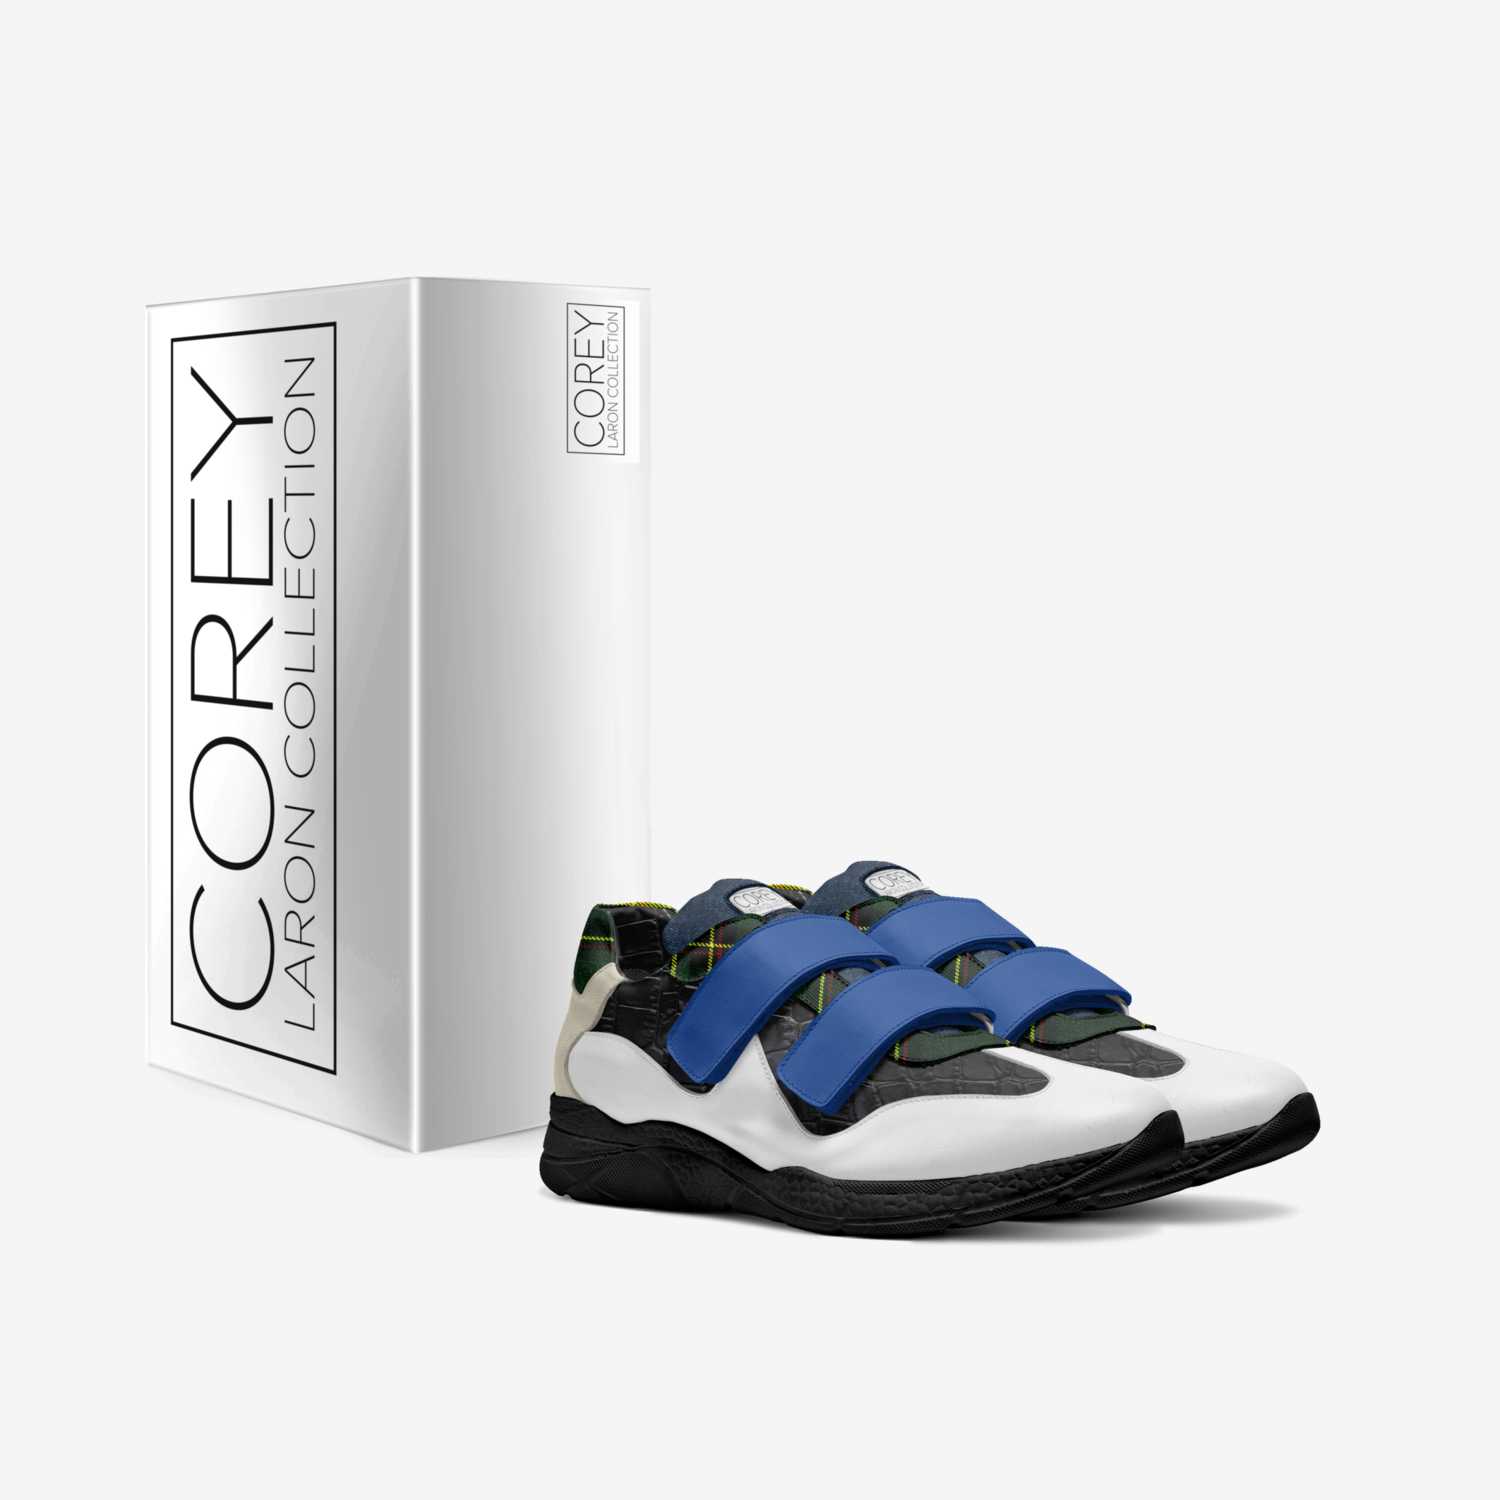 Corey Laron 5 custom made in Italy shoes by Corey Laron Hoskins Jr | Box view